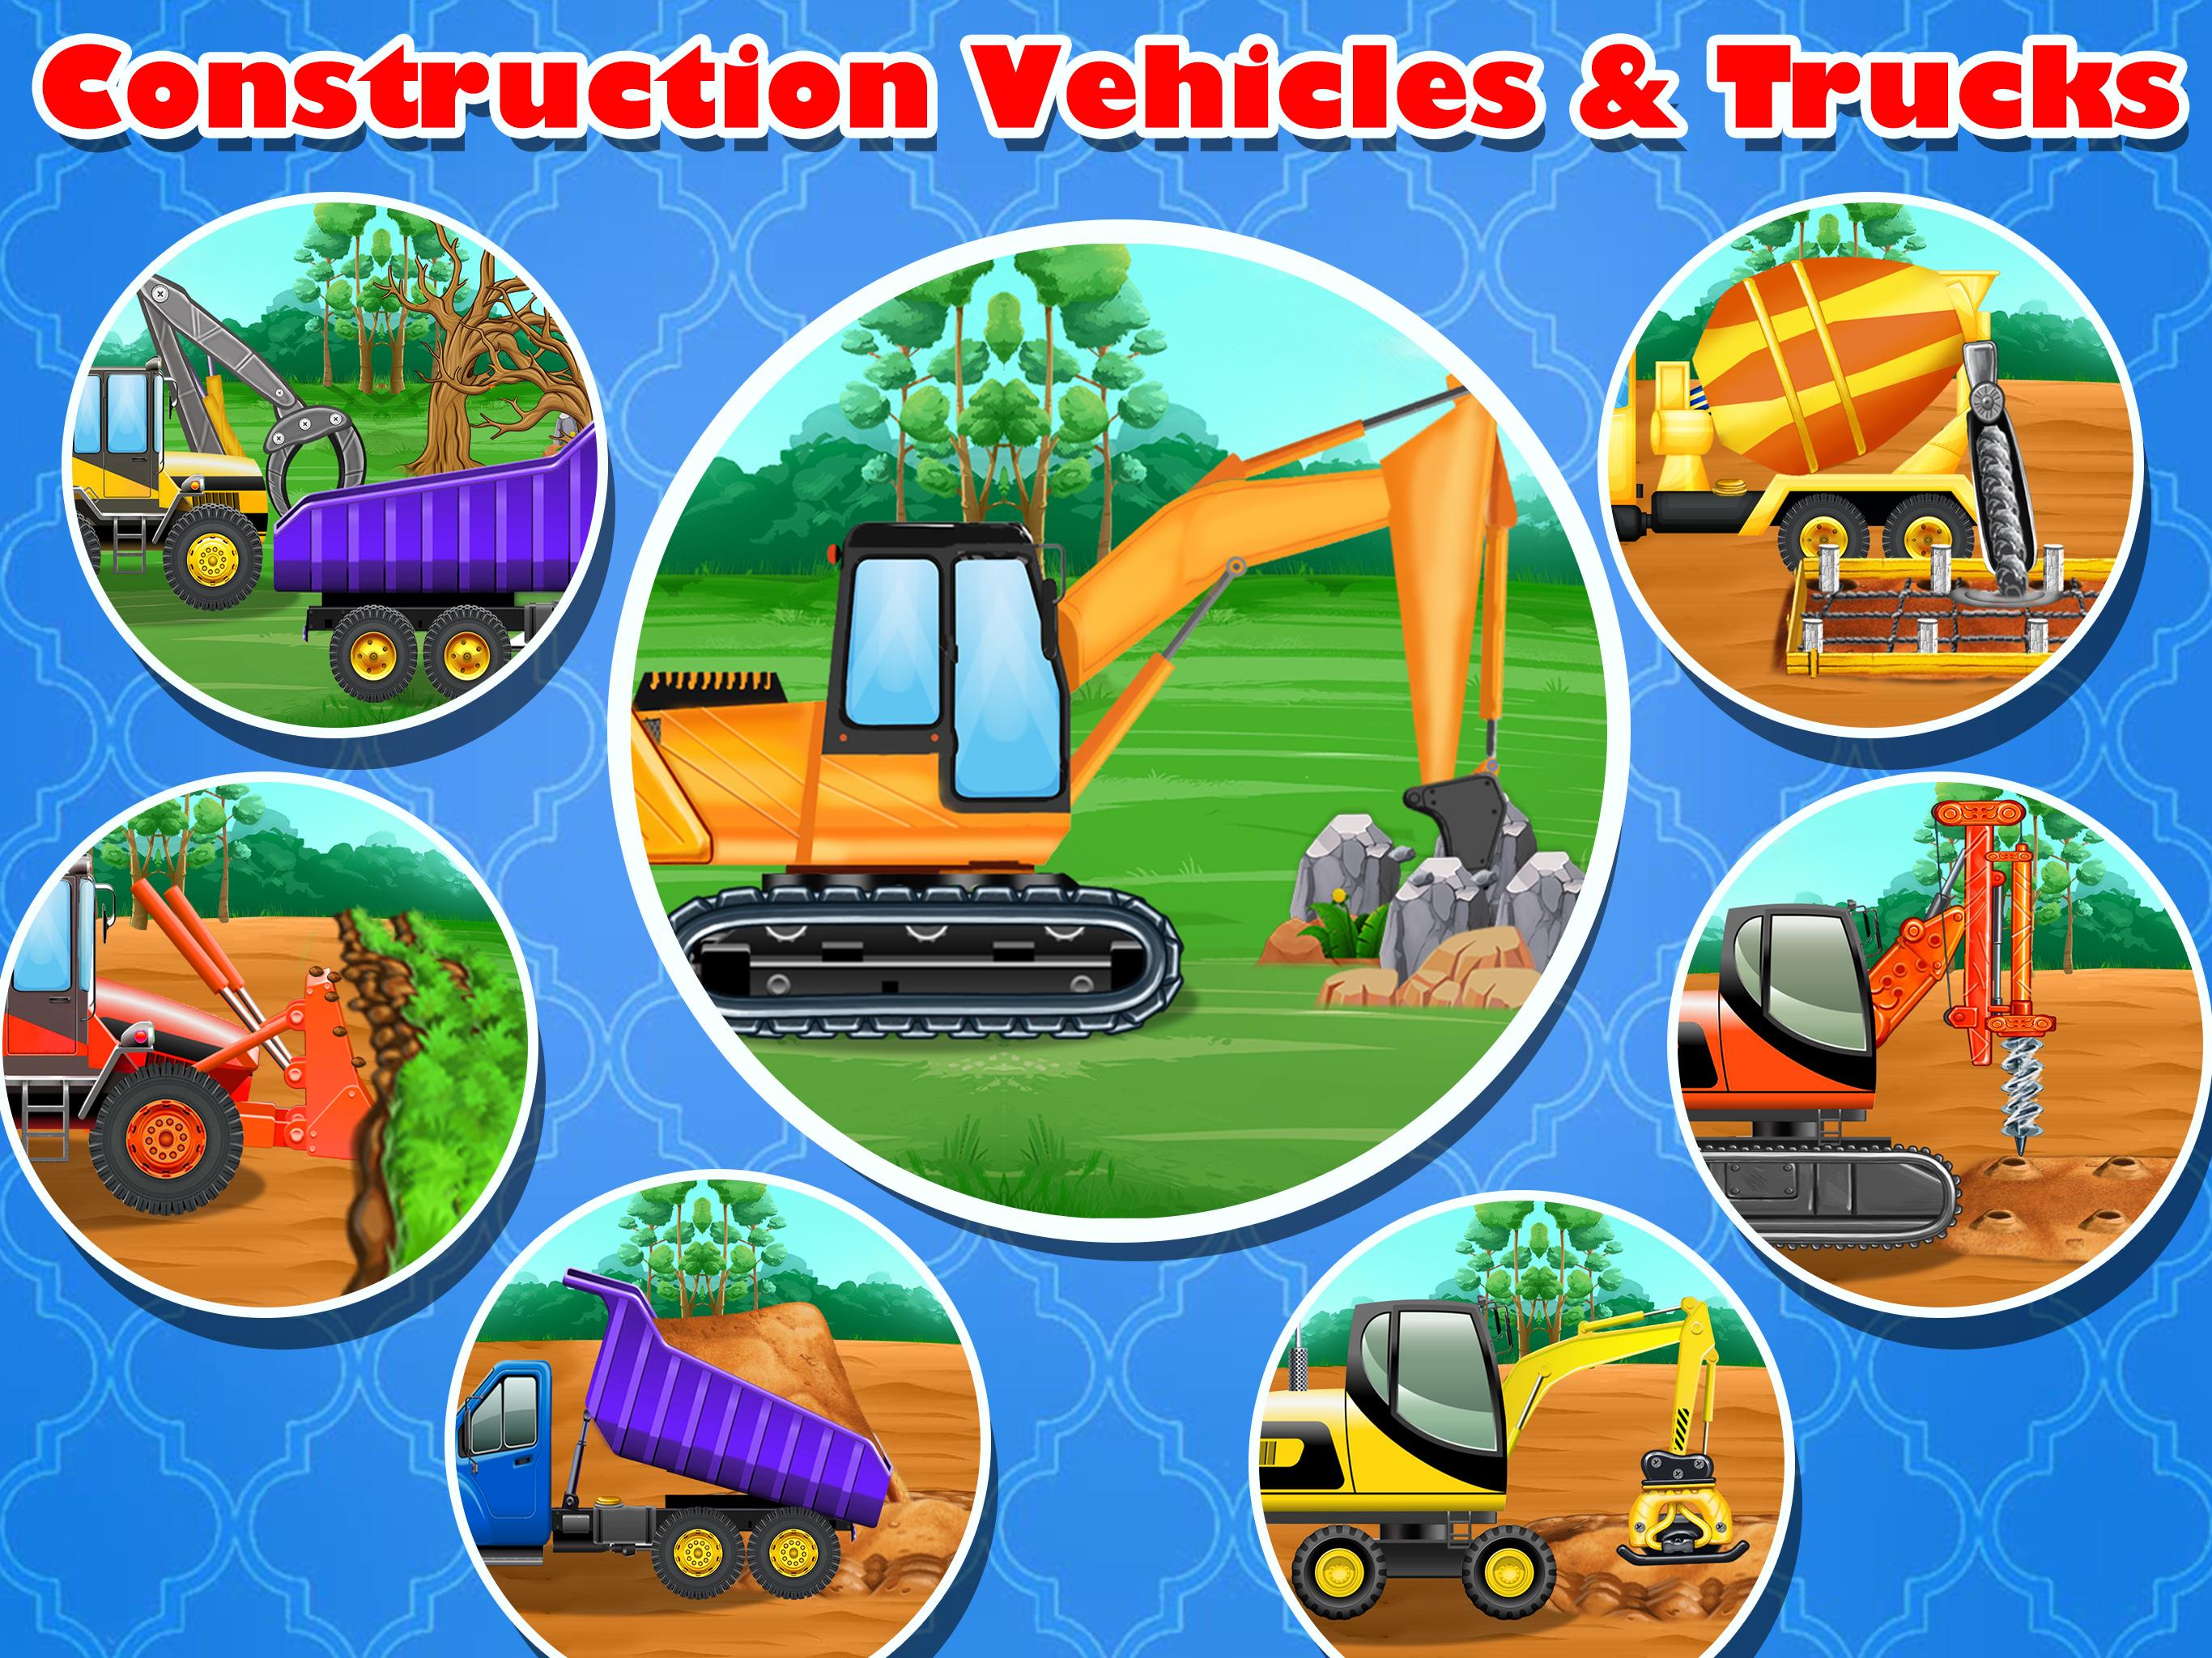 Construction Vehicles & Trucks - Games for Kids 1.9.0 Screenshot 7